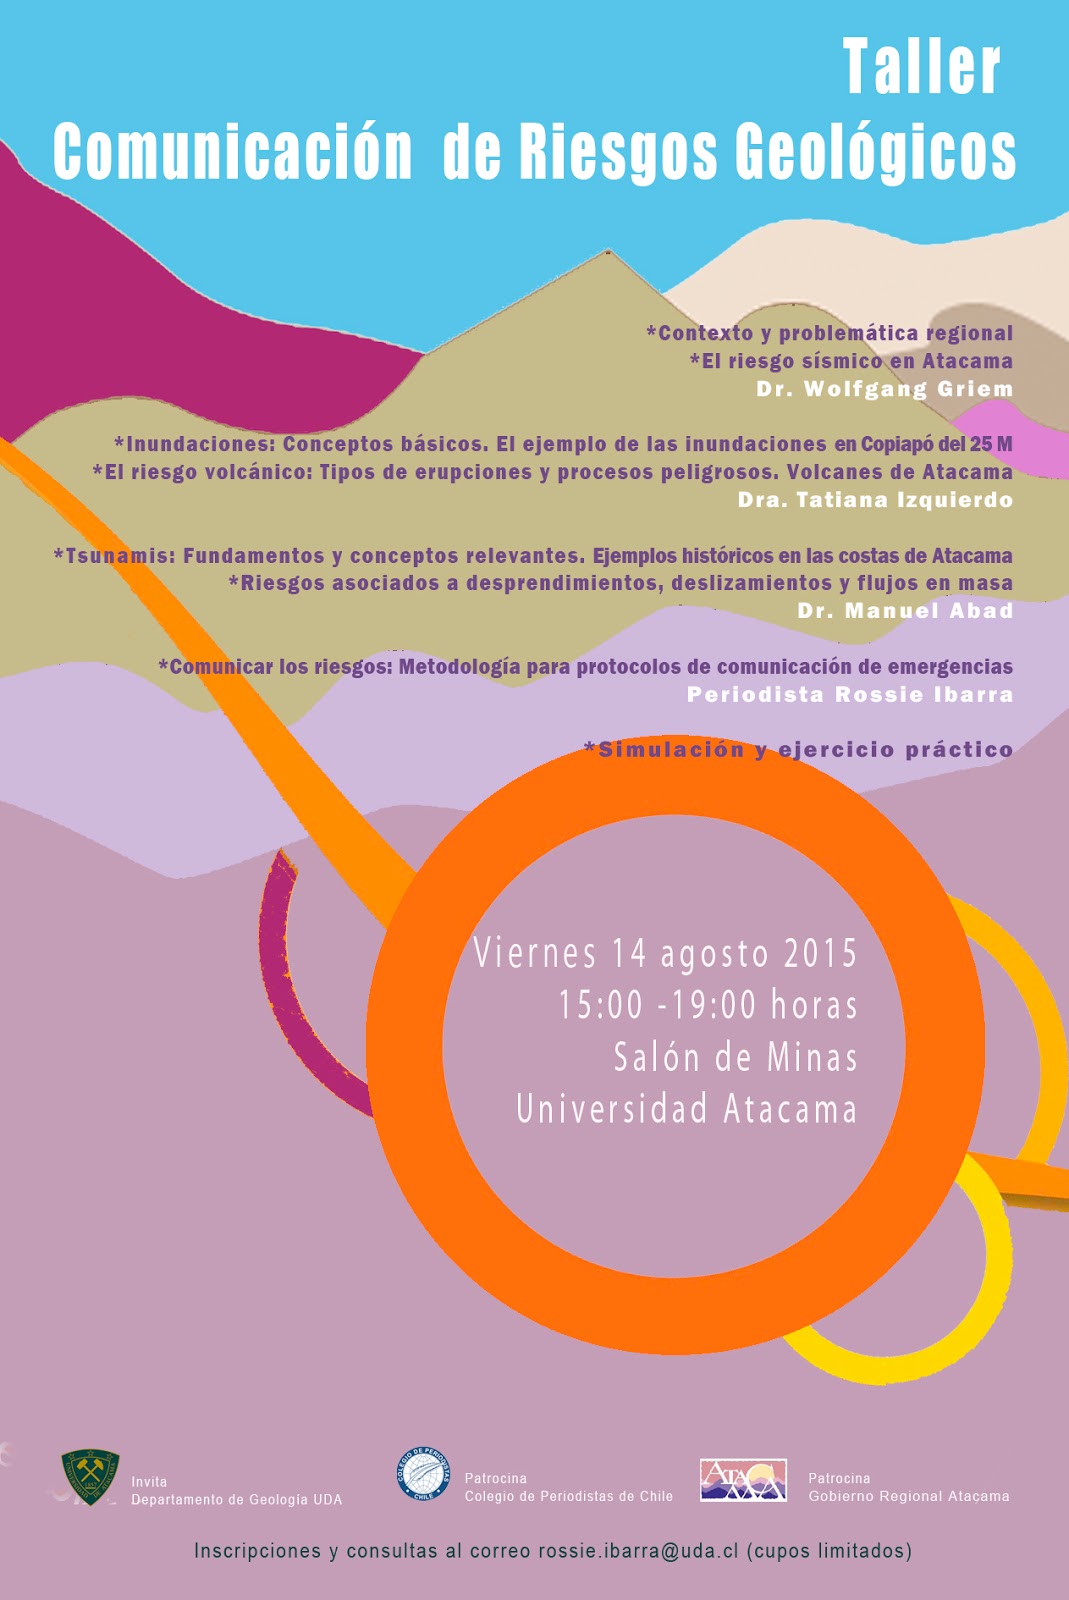 INVITACIÓN TALLER: "Comunicación de Riesgos Geológicos" (Universidad de Atacama)